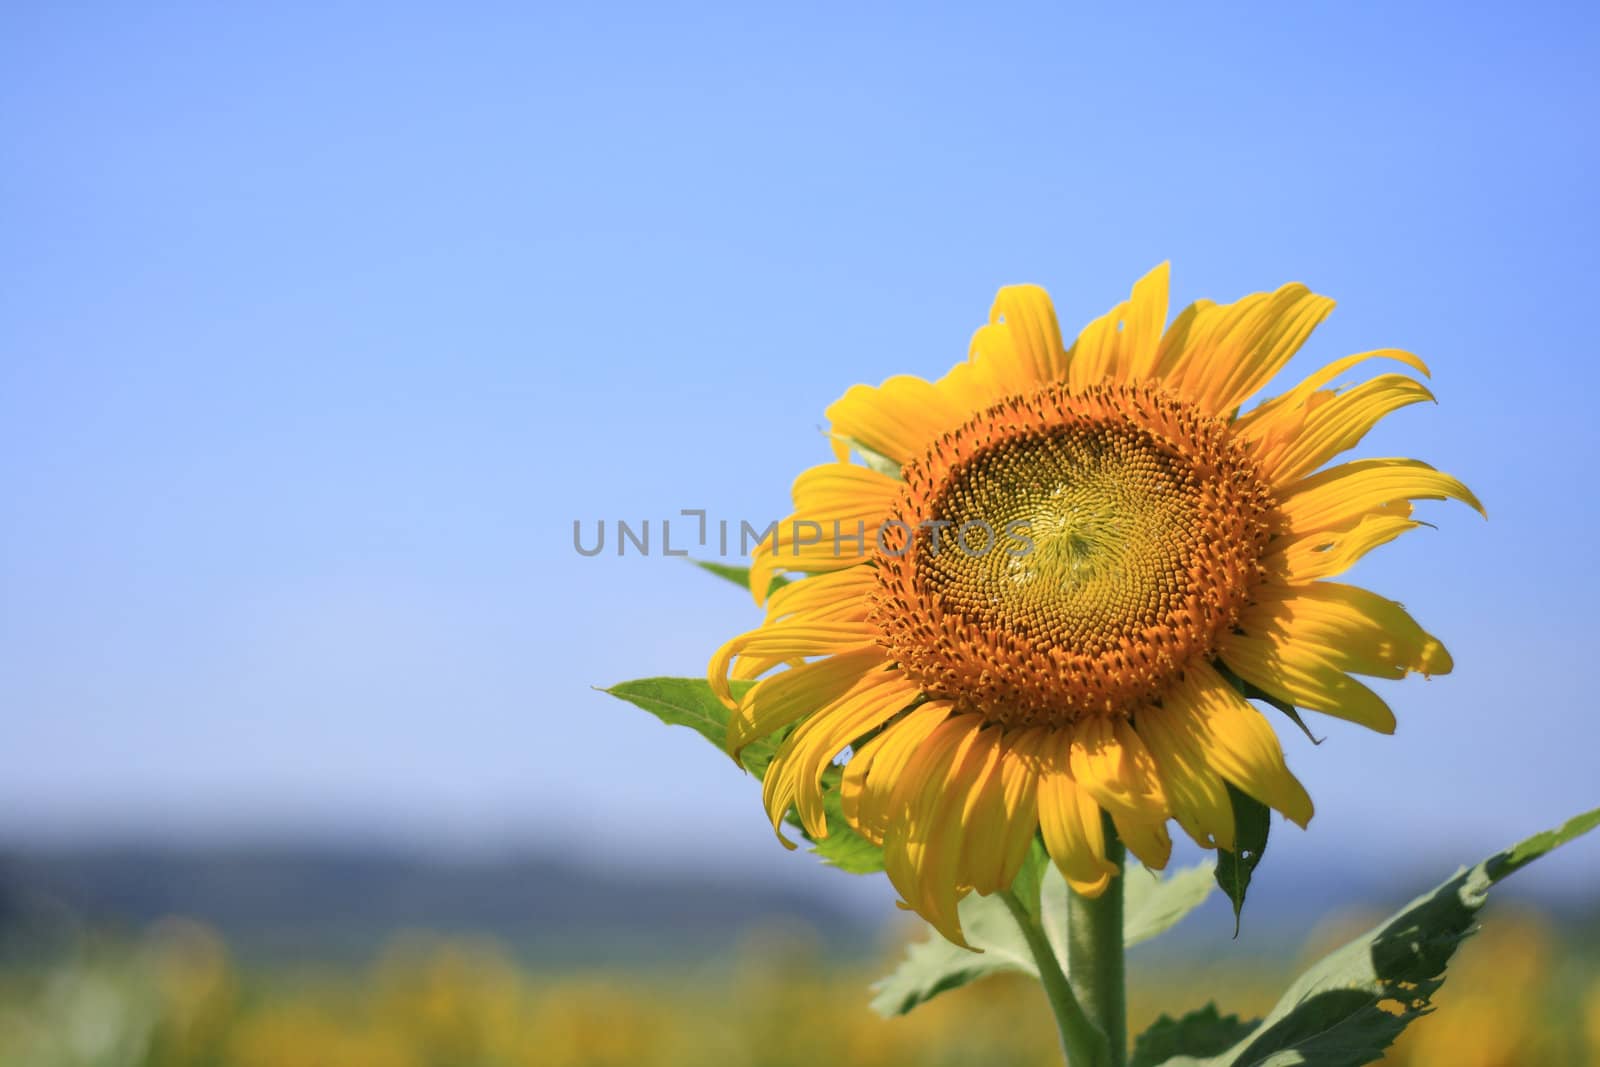 Sunflower by liewluck